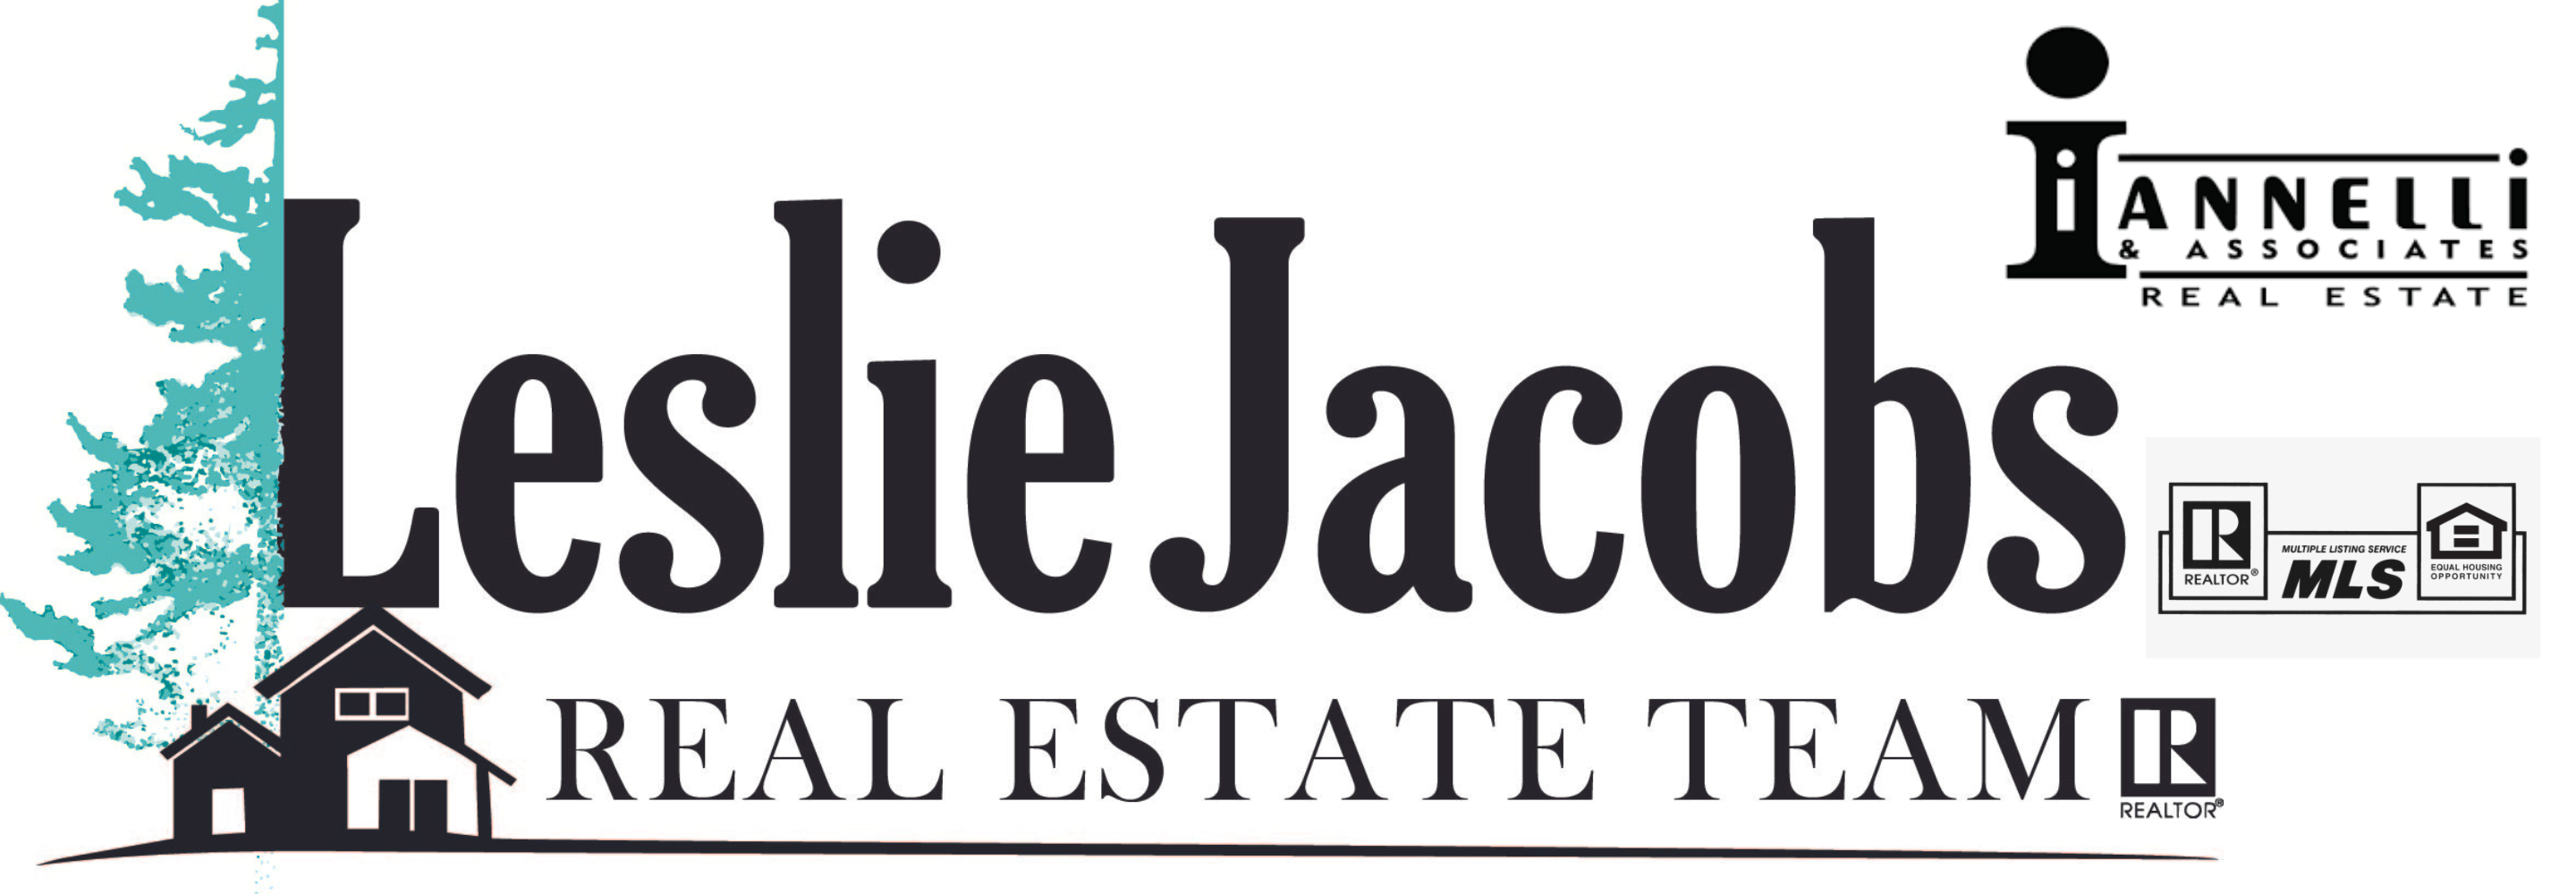 Leslie Jacobs Real Estate Team - Iannelli and Associates Real Estate